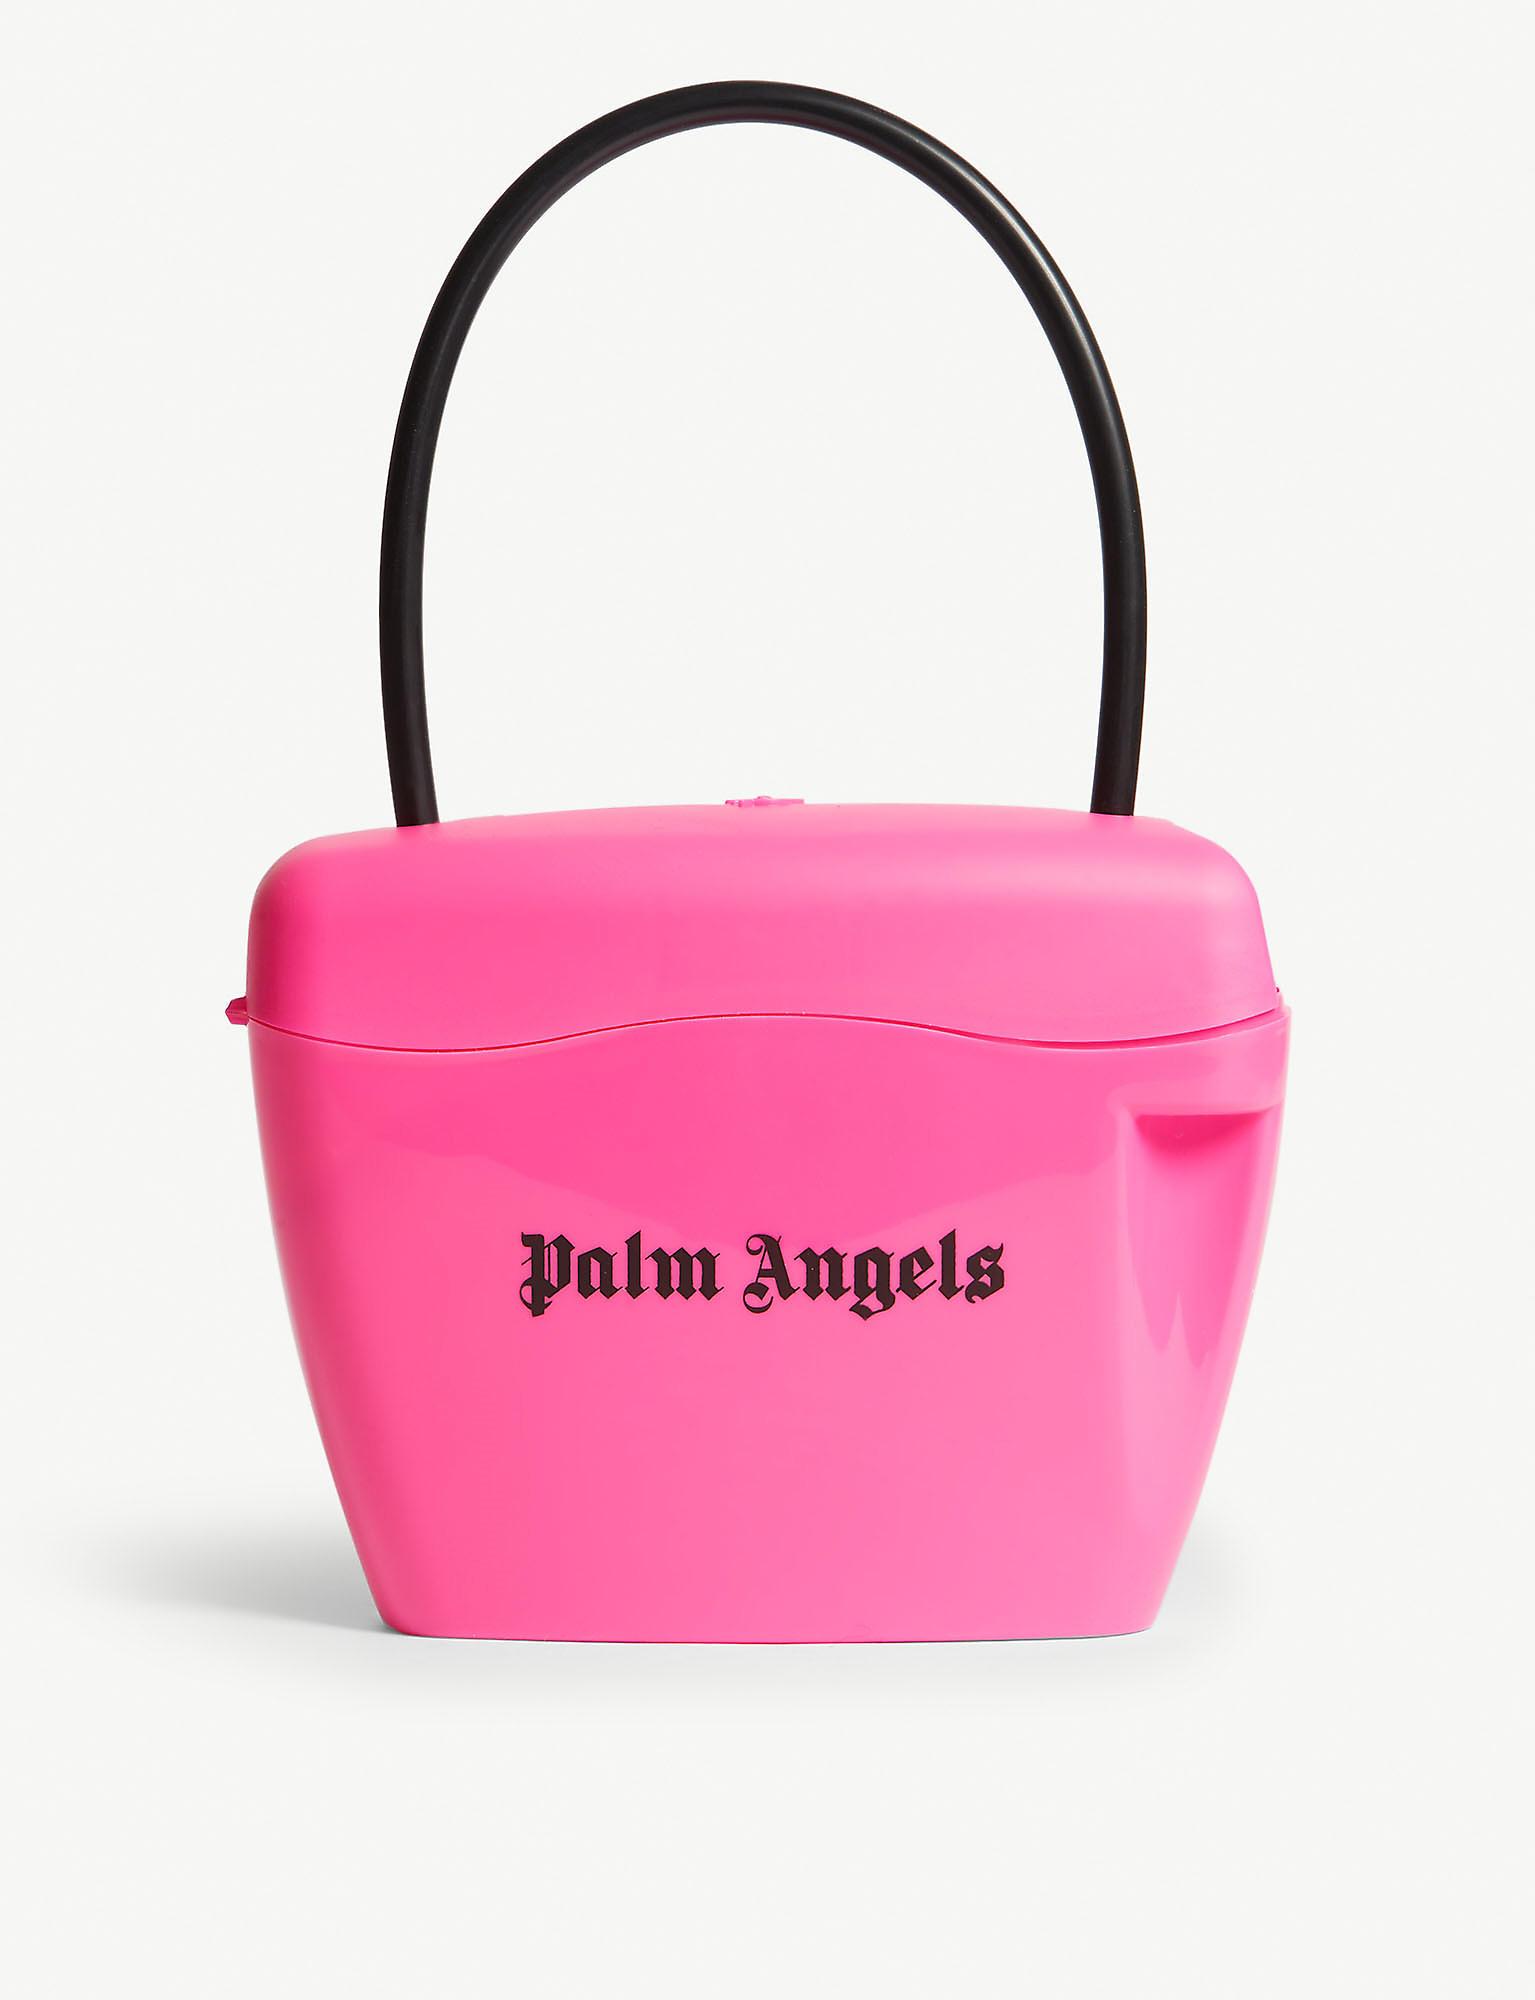 Palm Angels Bag Pink Online, SAVE 32% - loutzenhiserfuneralhomes.com